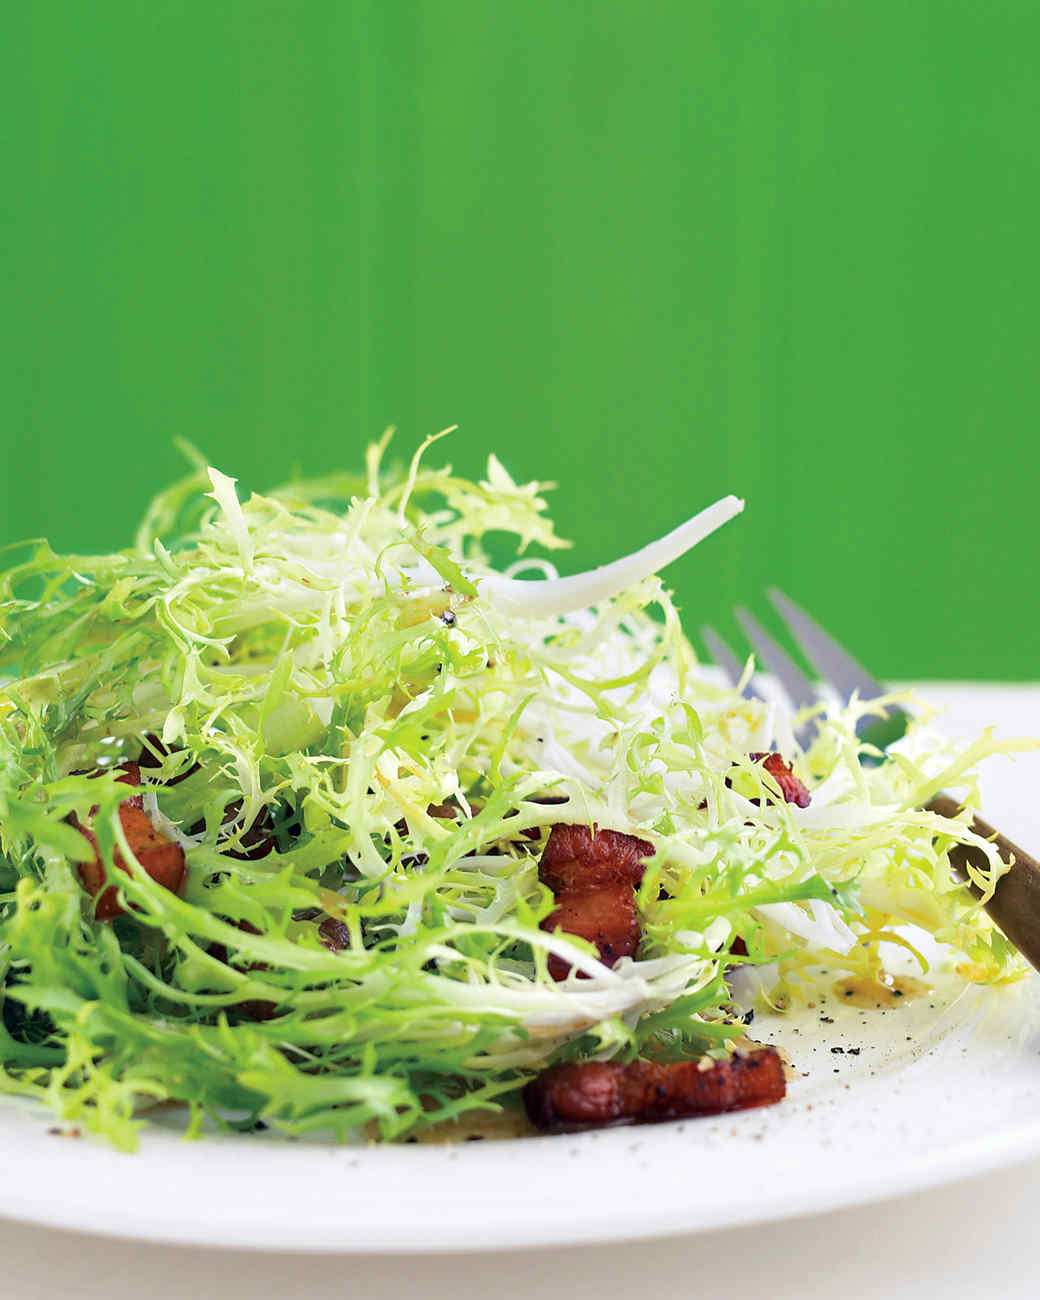 Frisee Salad with Warm Bacon Vinaigrette